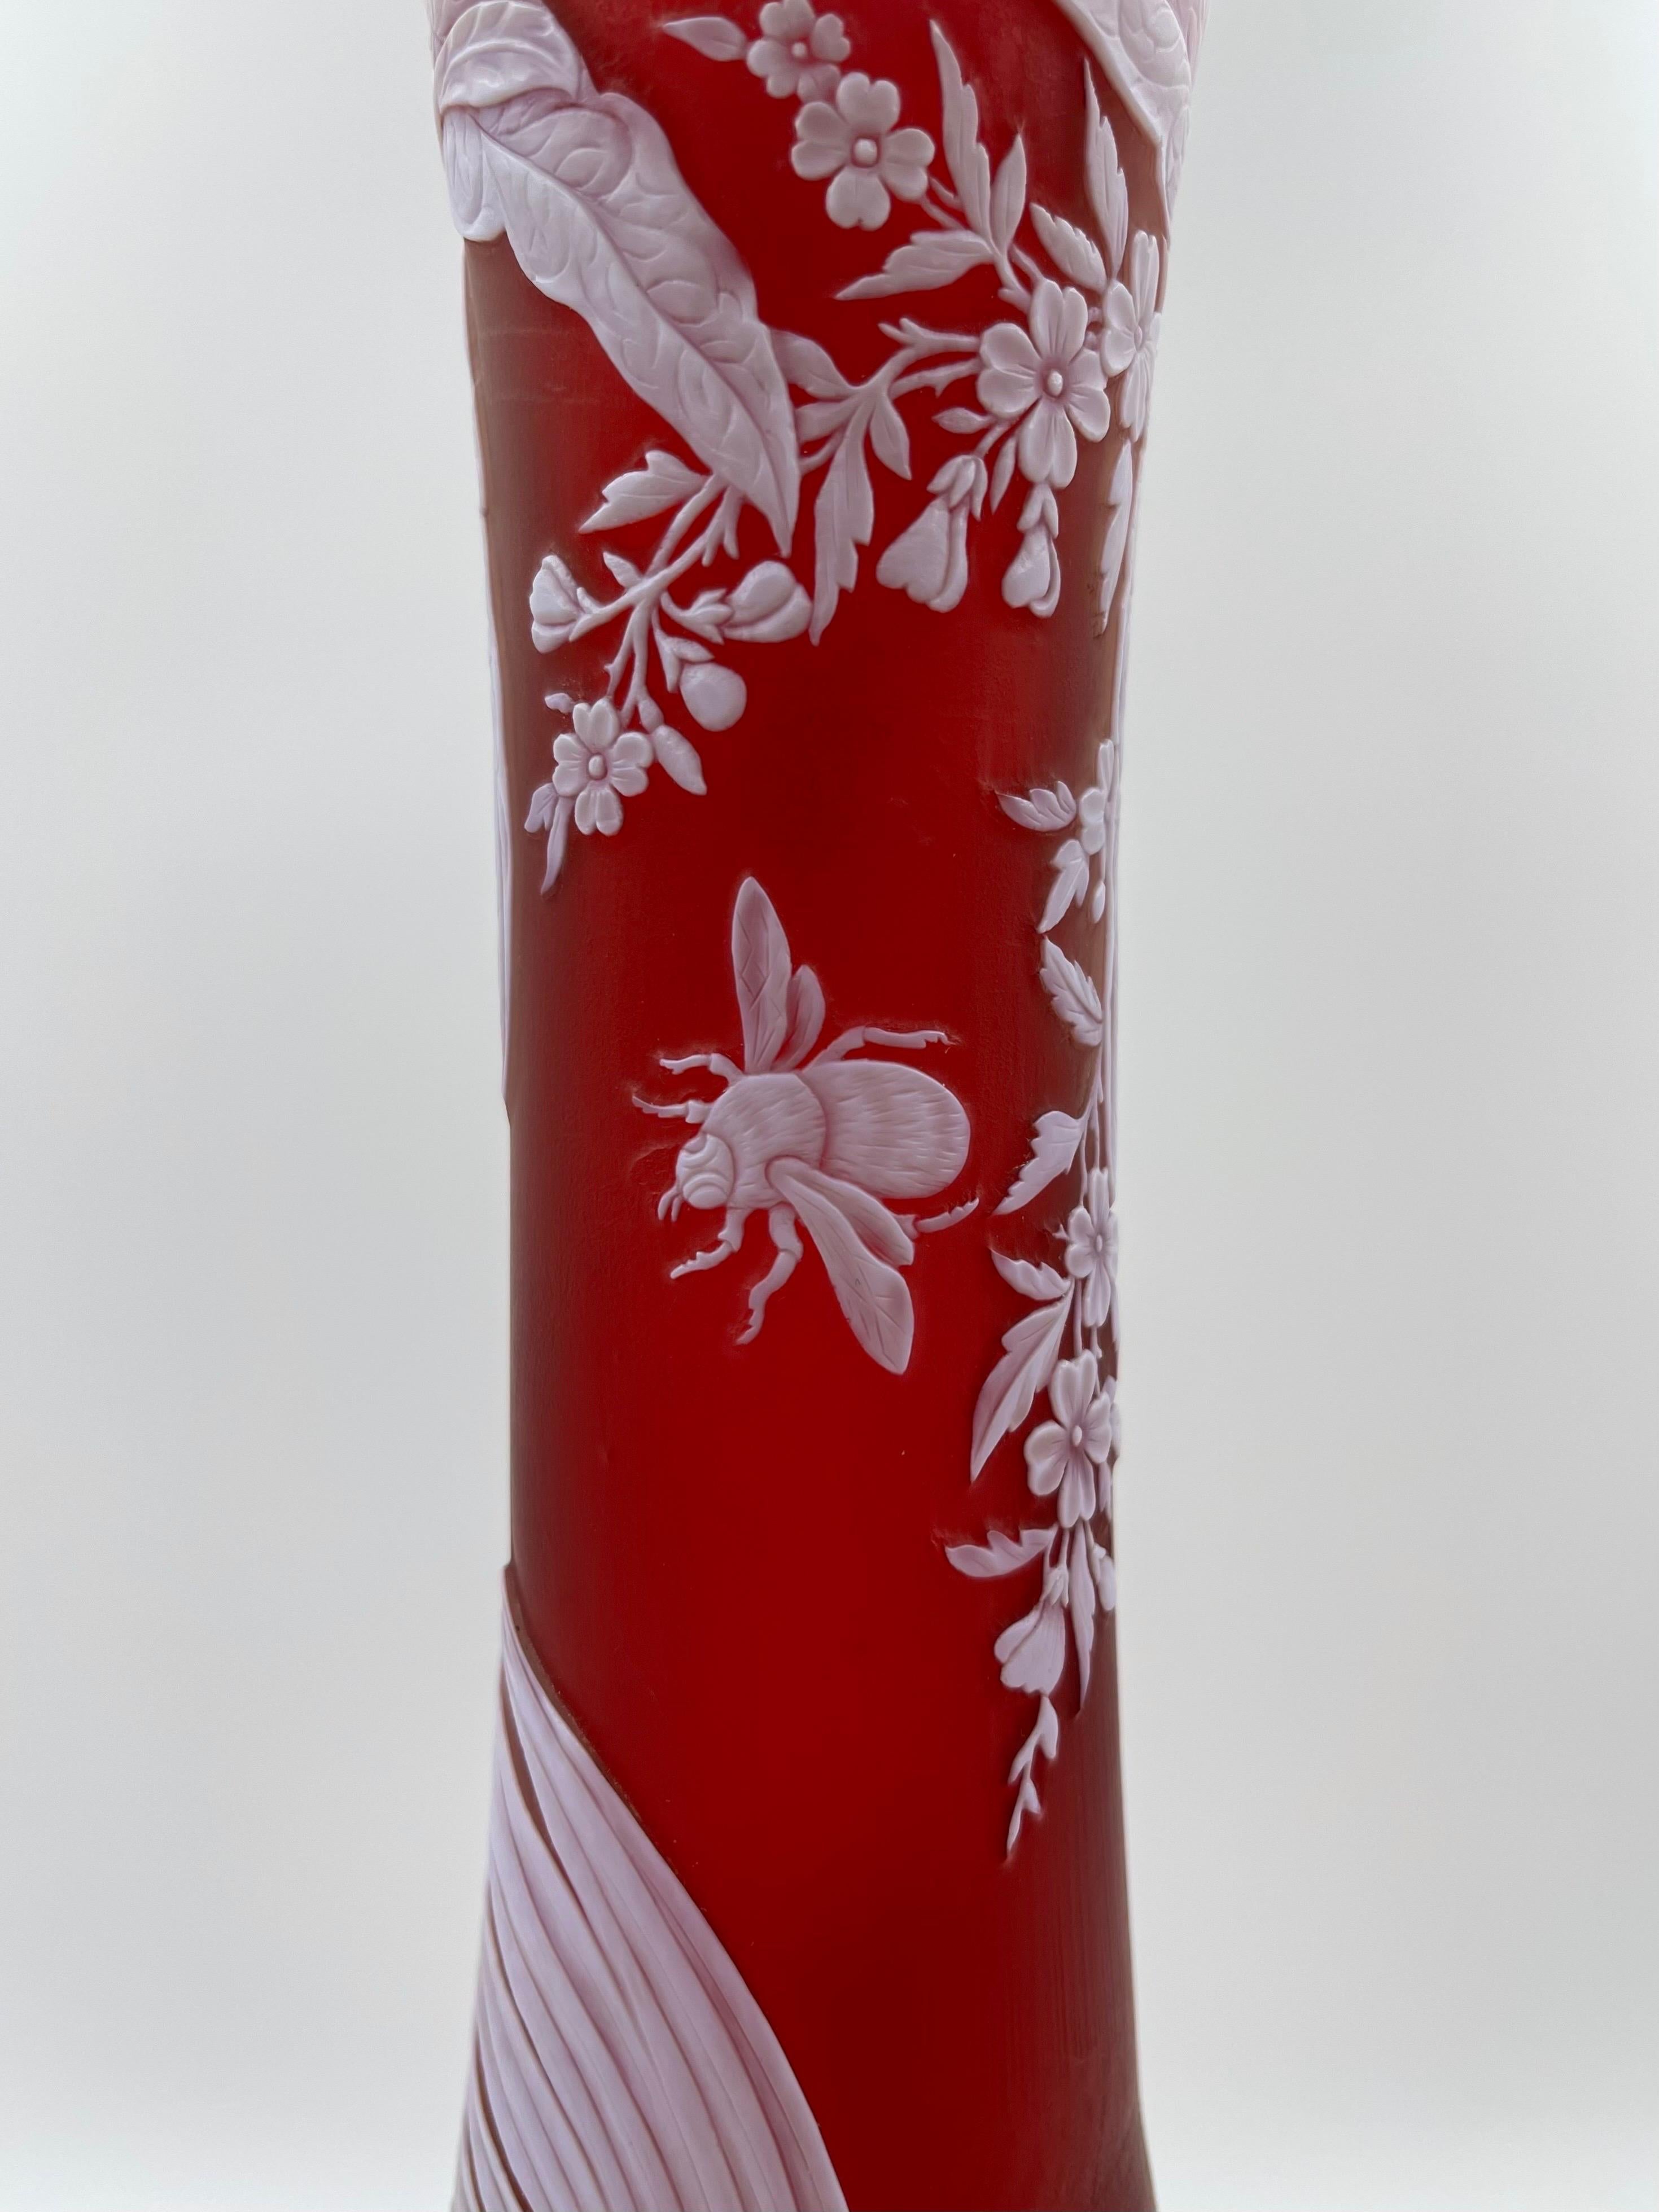 Monumental Webb English Red Art Glass vase  1